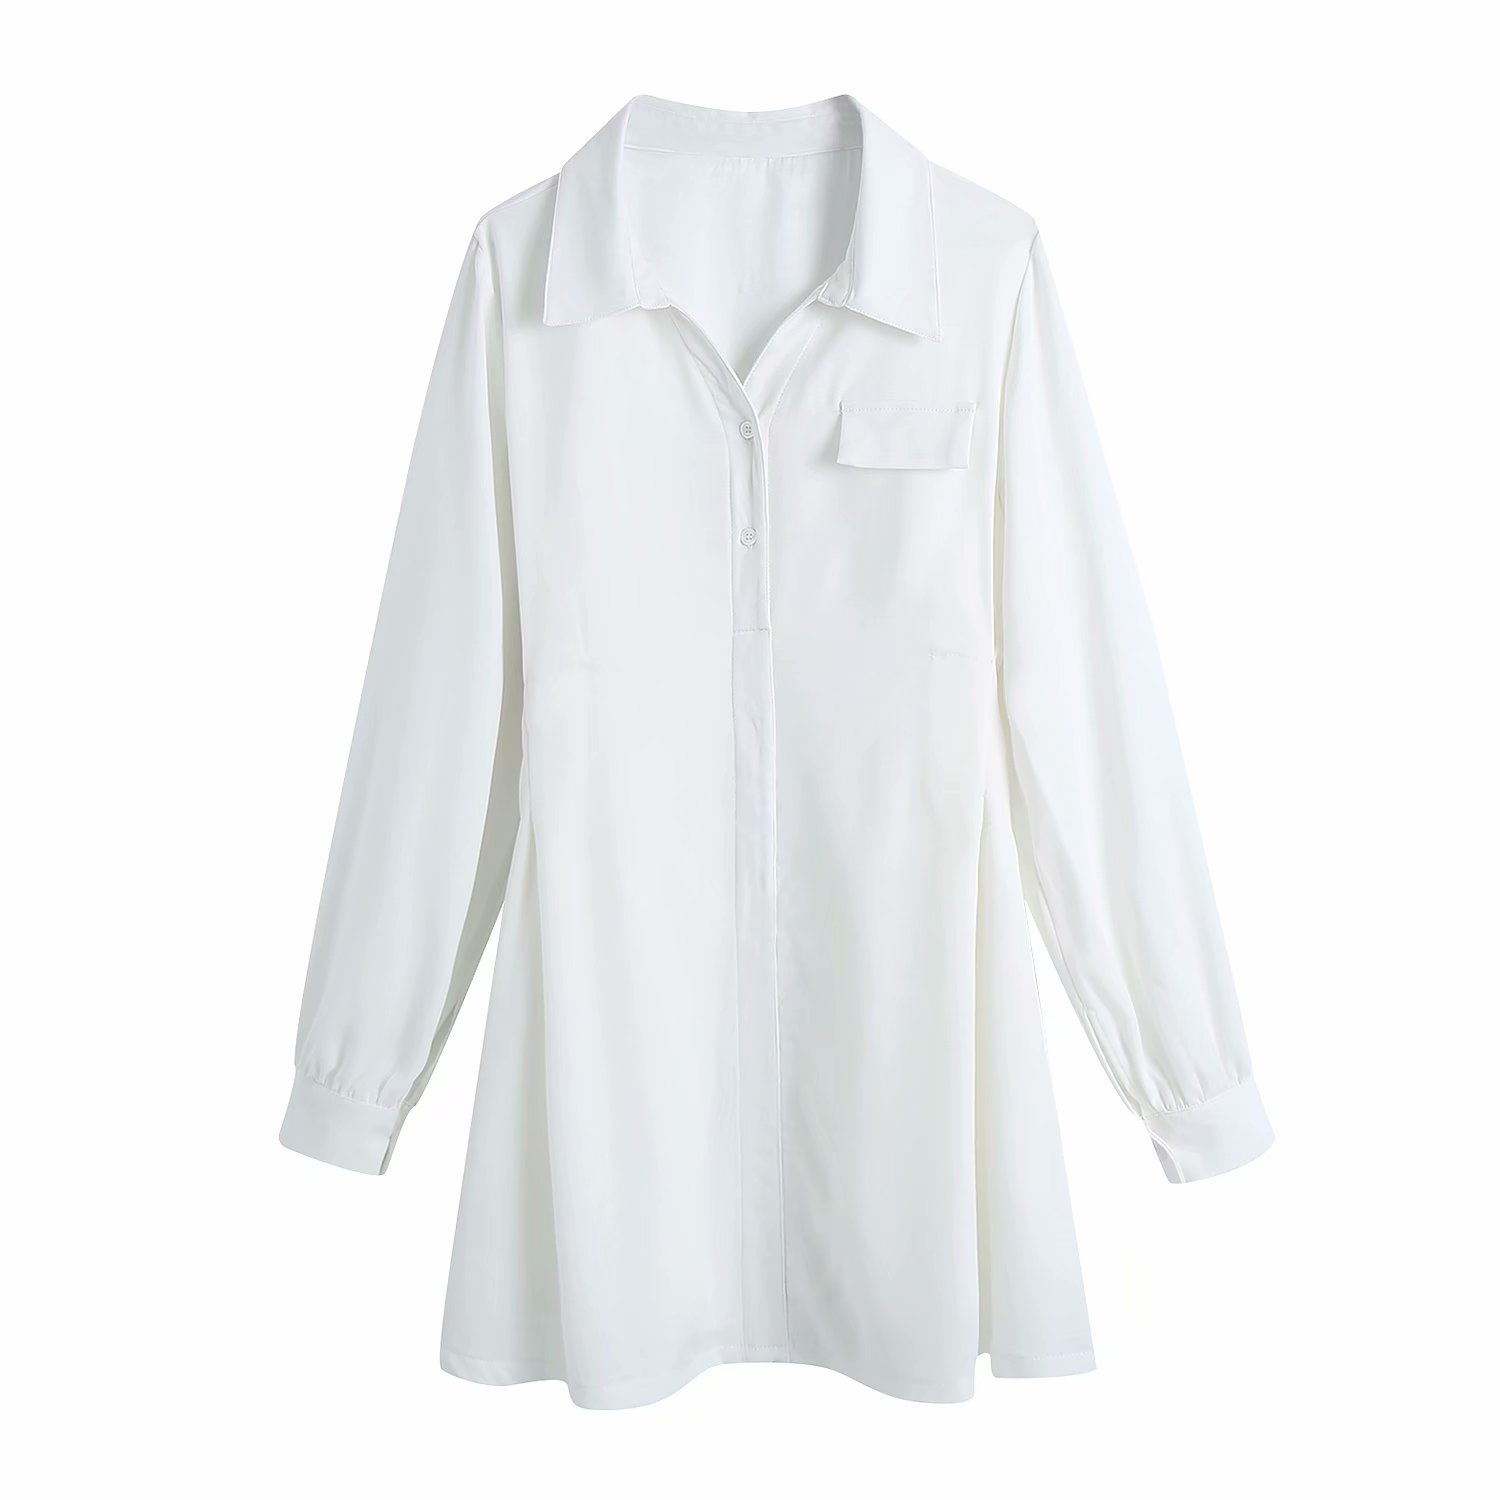 White Waist Shirt Dress Nihaostyles wholesale clothing vendor NSAM75916